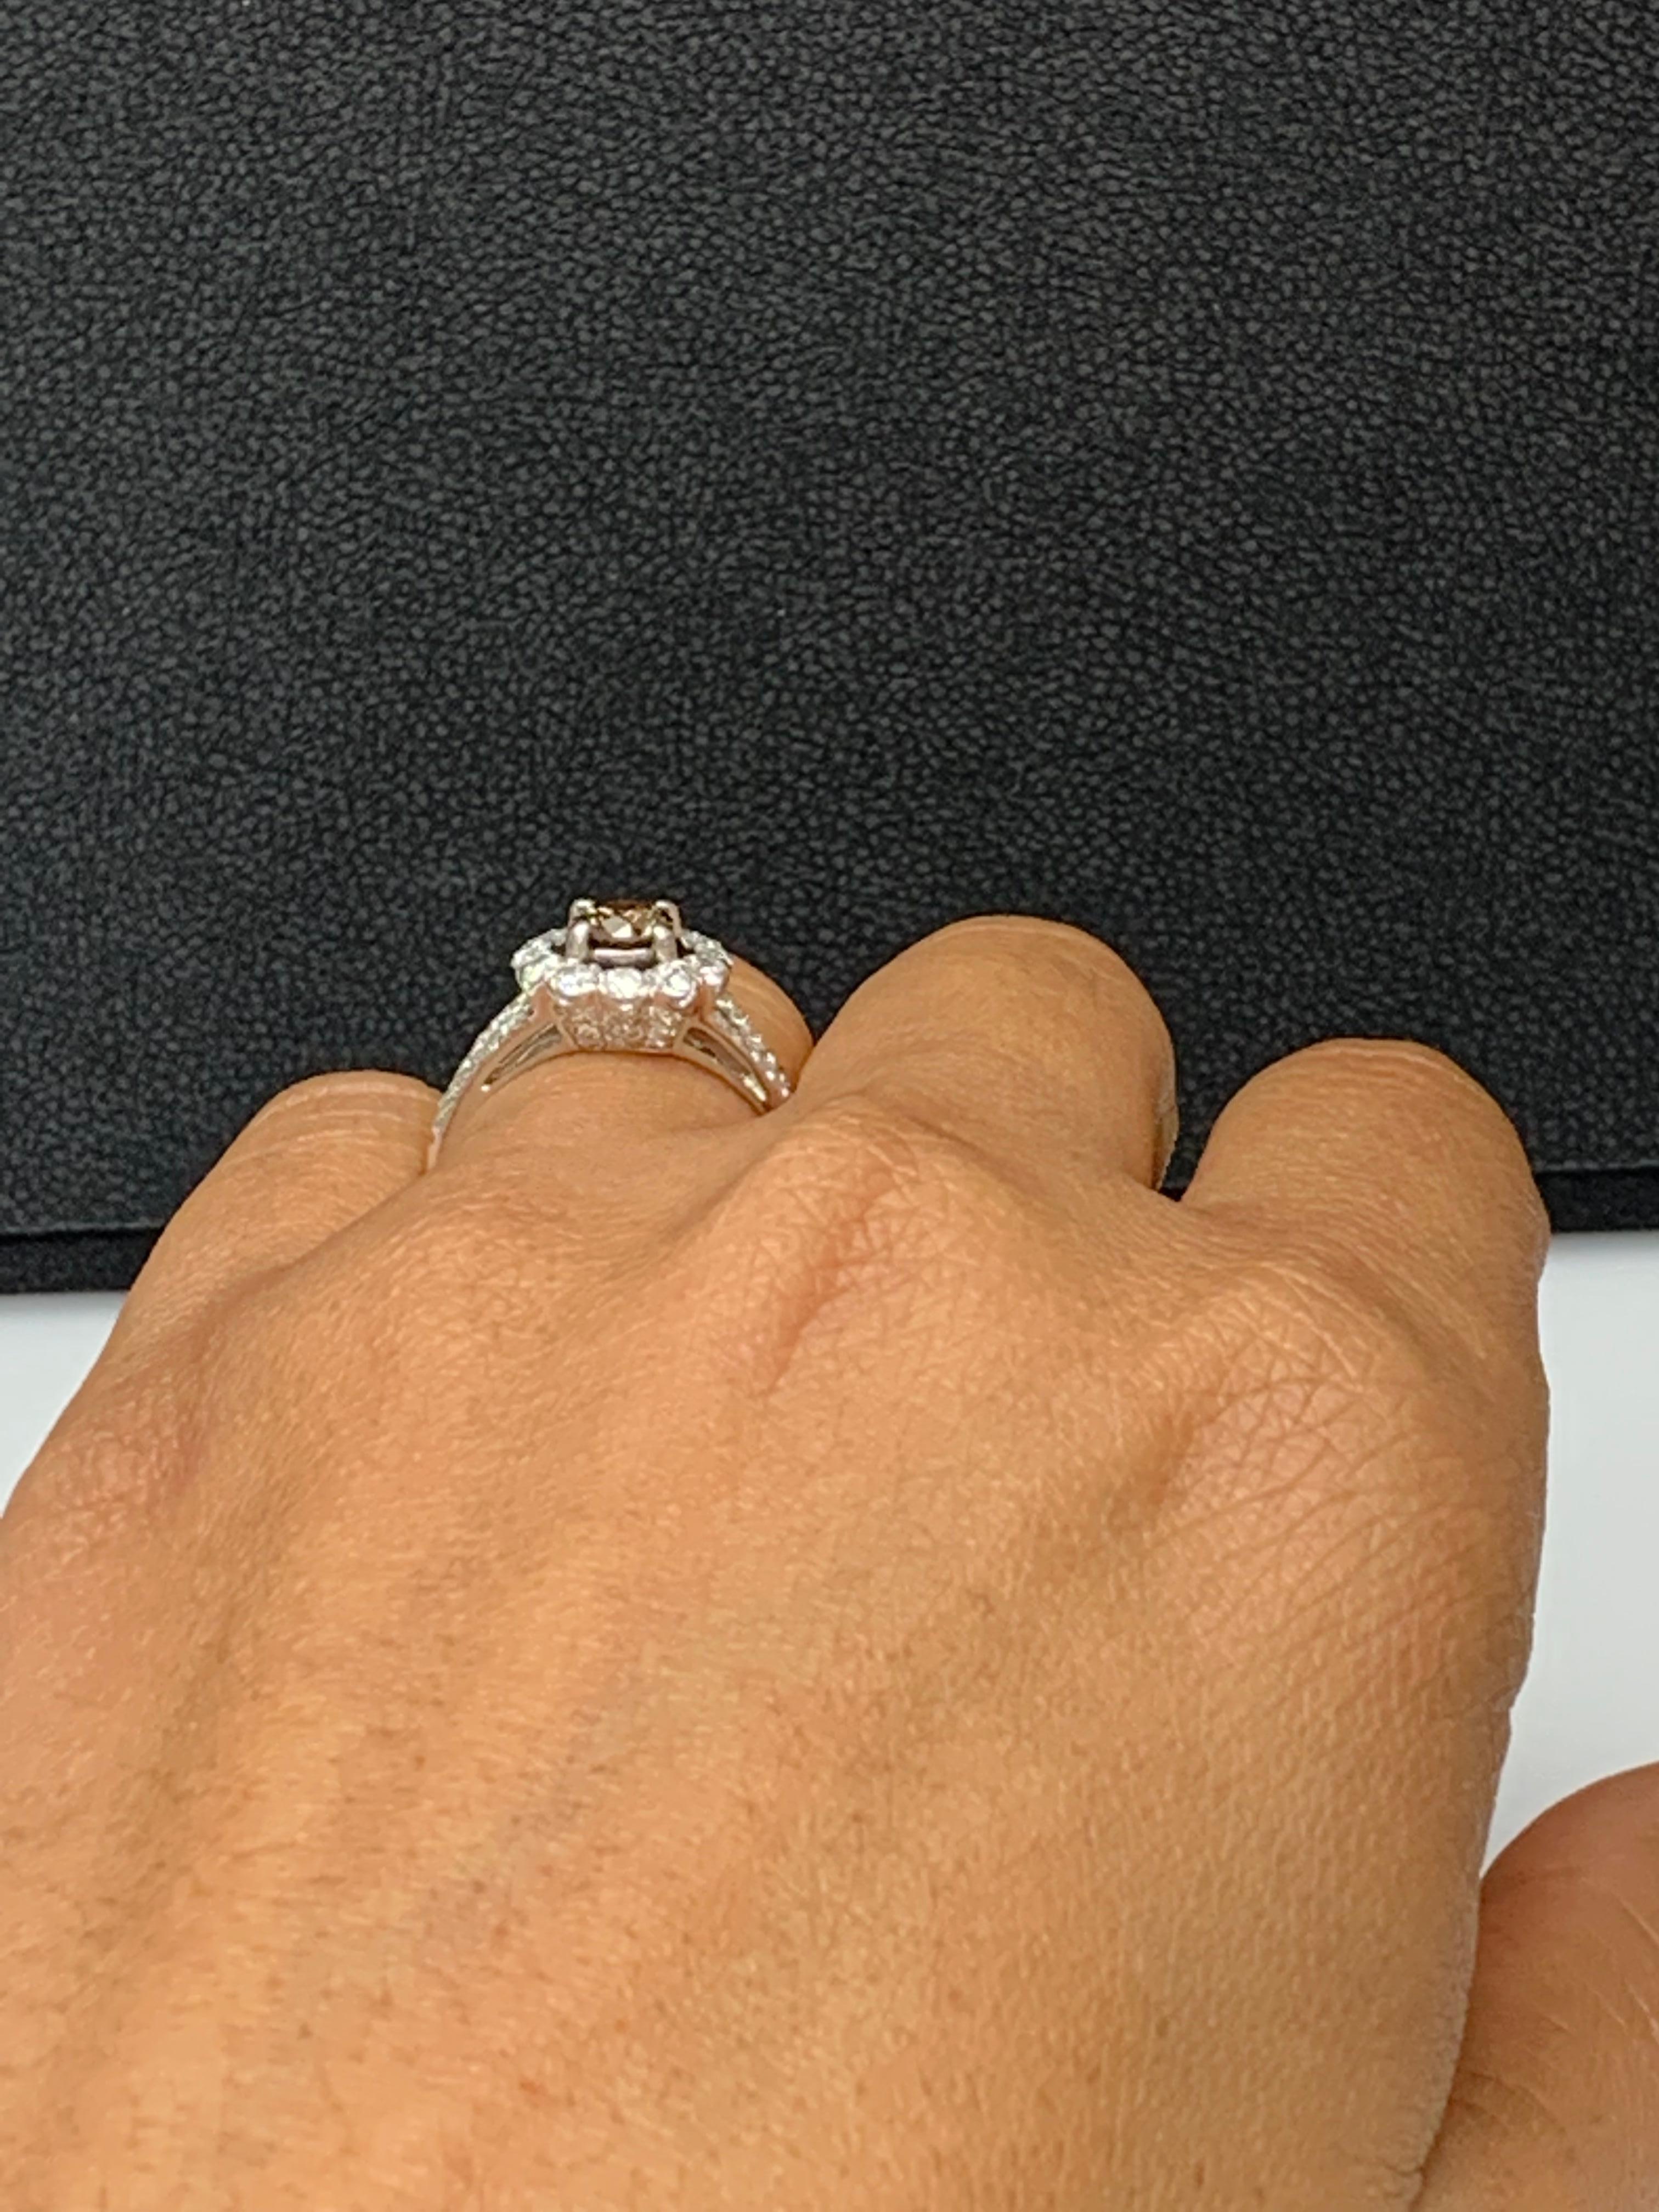 0.61 Carat Brilliant Cut Fancy Brown Diamond 18K White Gold Ring For Sale 8